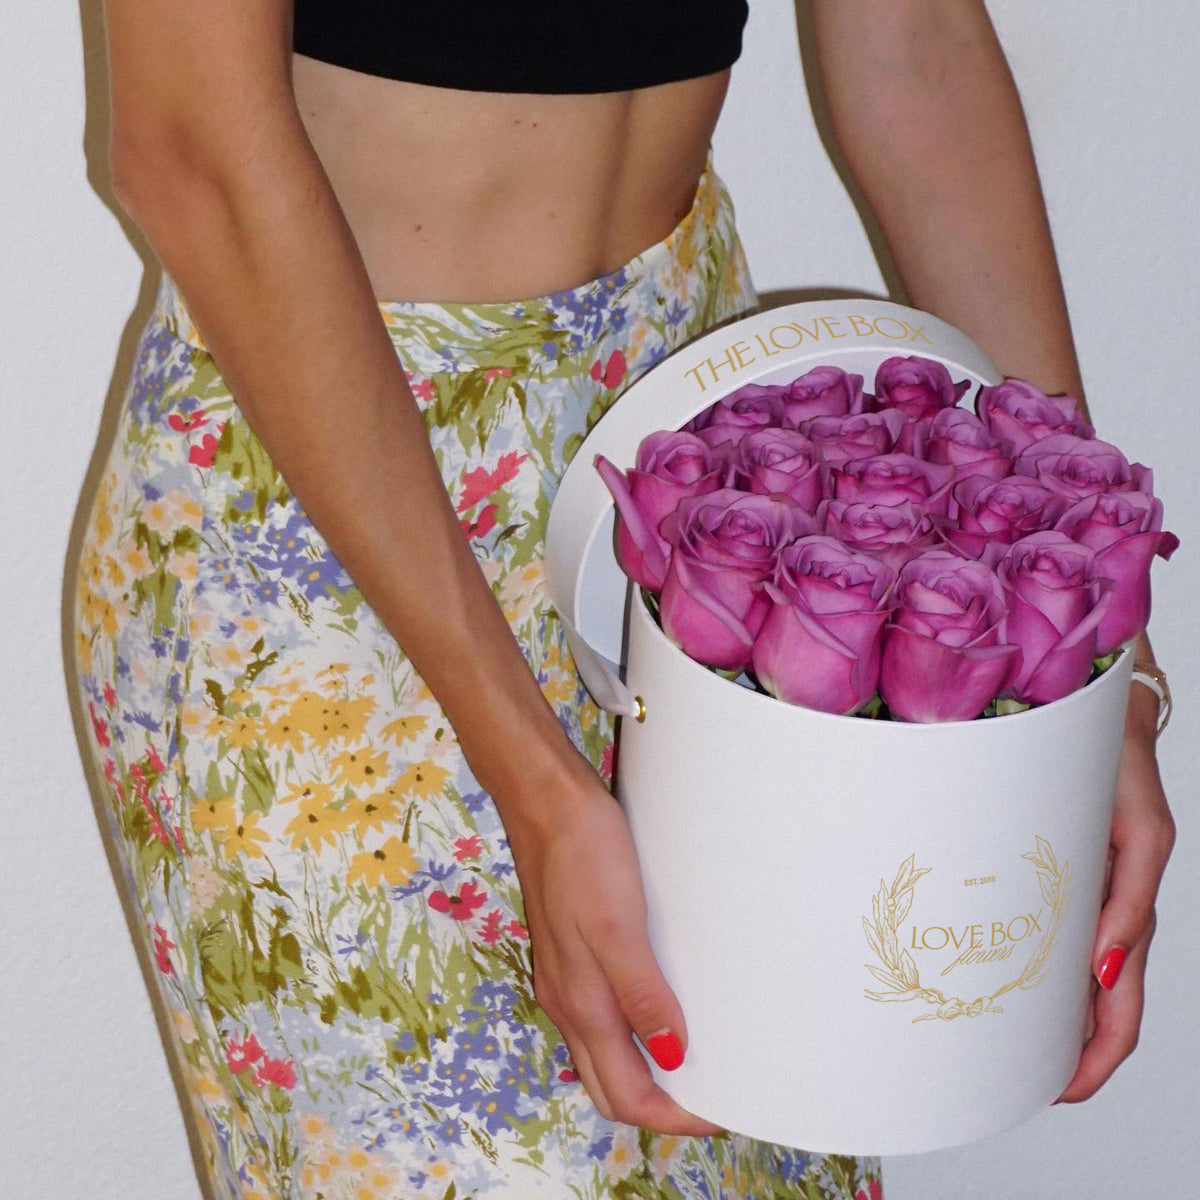 Deep Love - Black Box – Same Day Flower Delivery Las Vegas